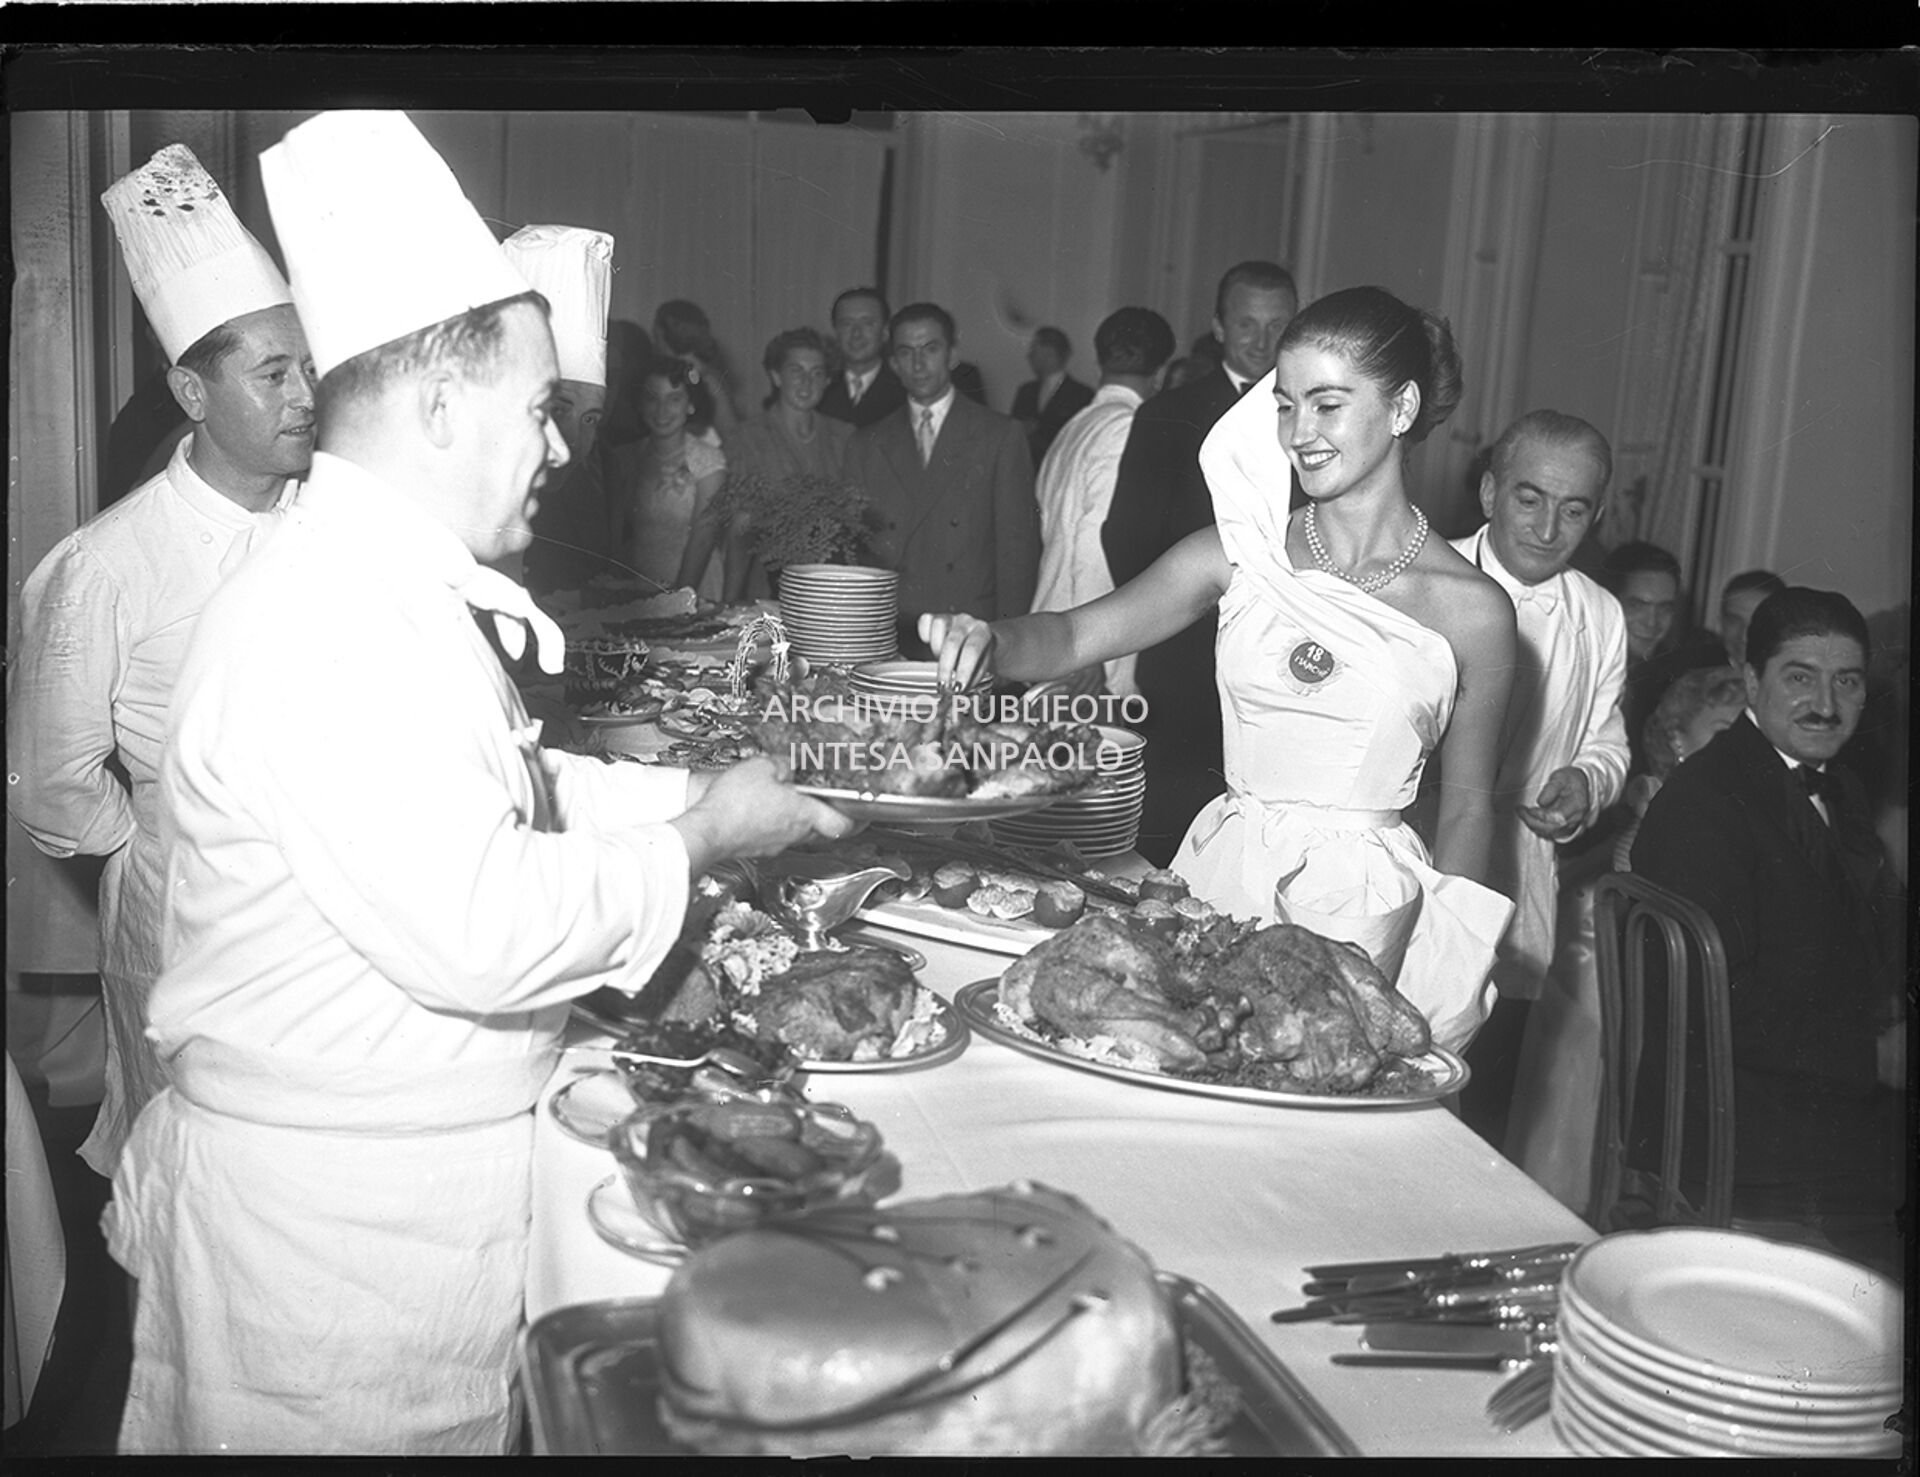 Mariella Giampieri, Miss Italia 1949, at a buffet in Stresa